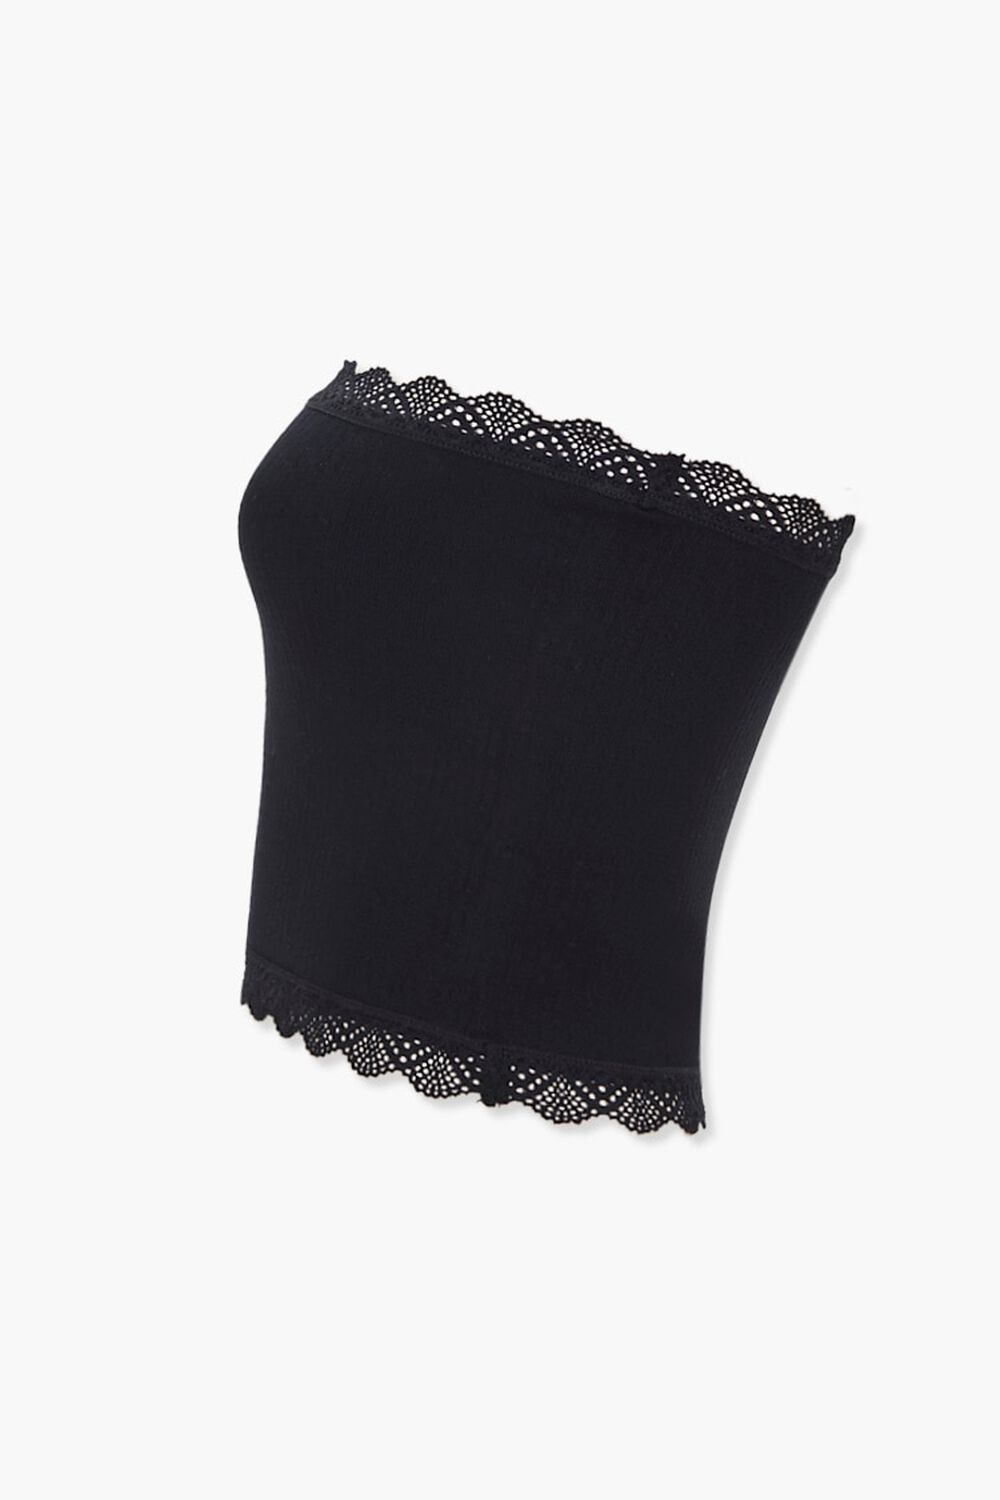 BLACK Ribbed Crochet-Trim Tube Top, image 2